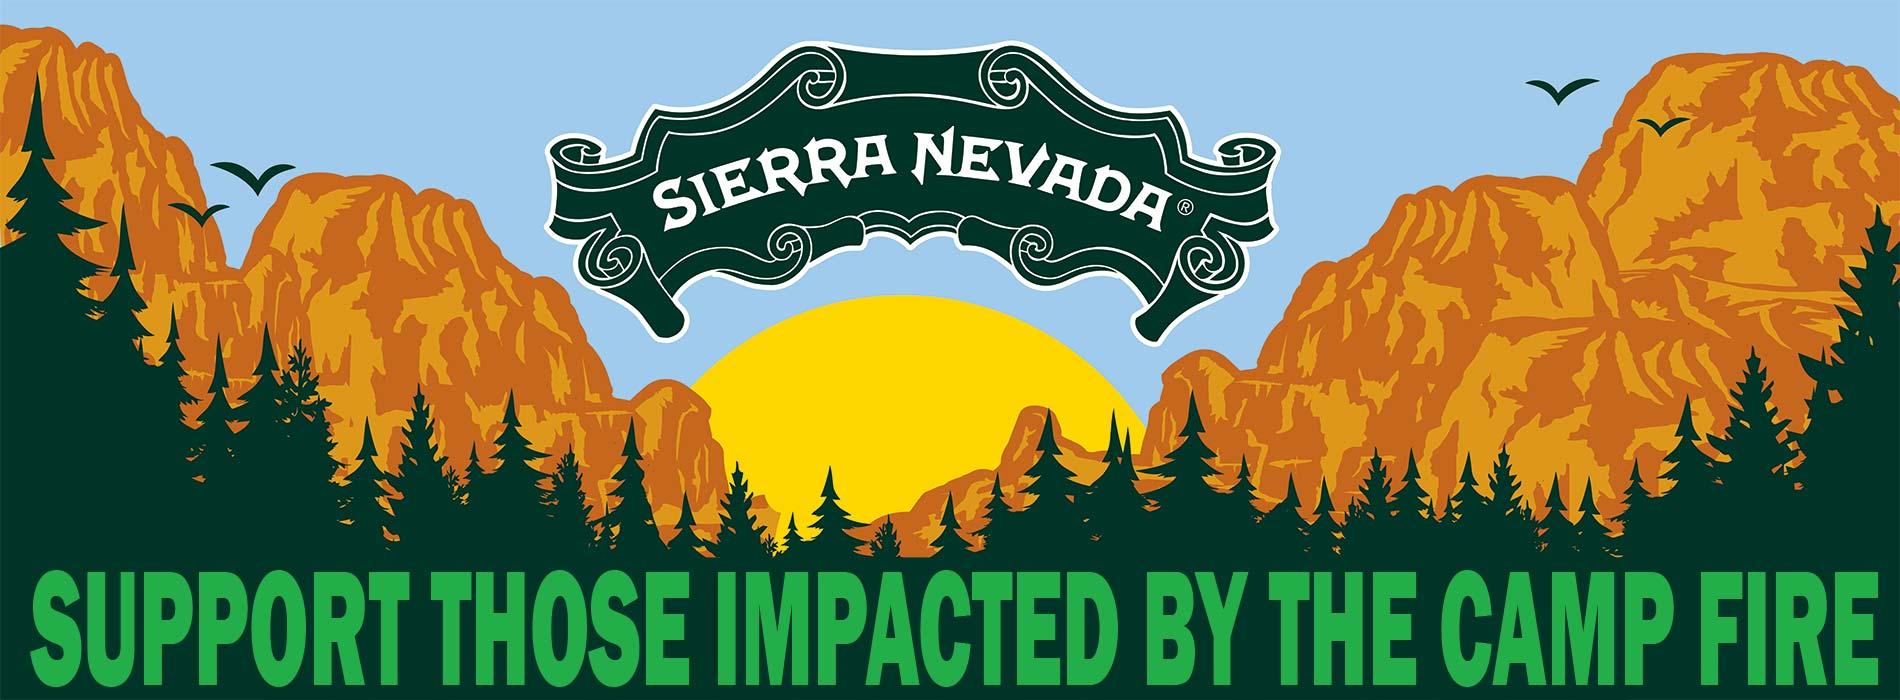 Serria Nevada Logo - Sierra Nevada Brewing Co.